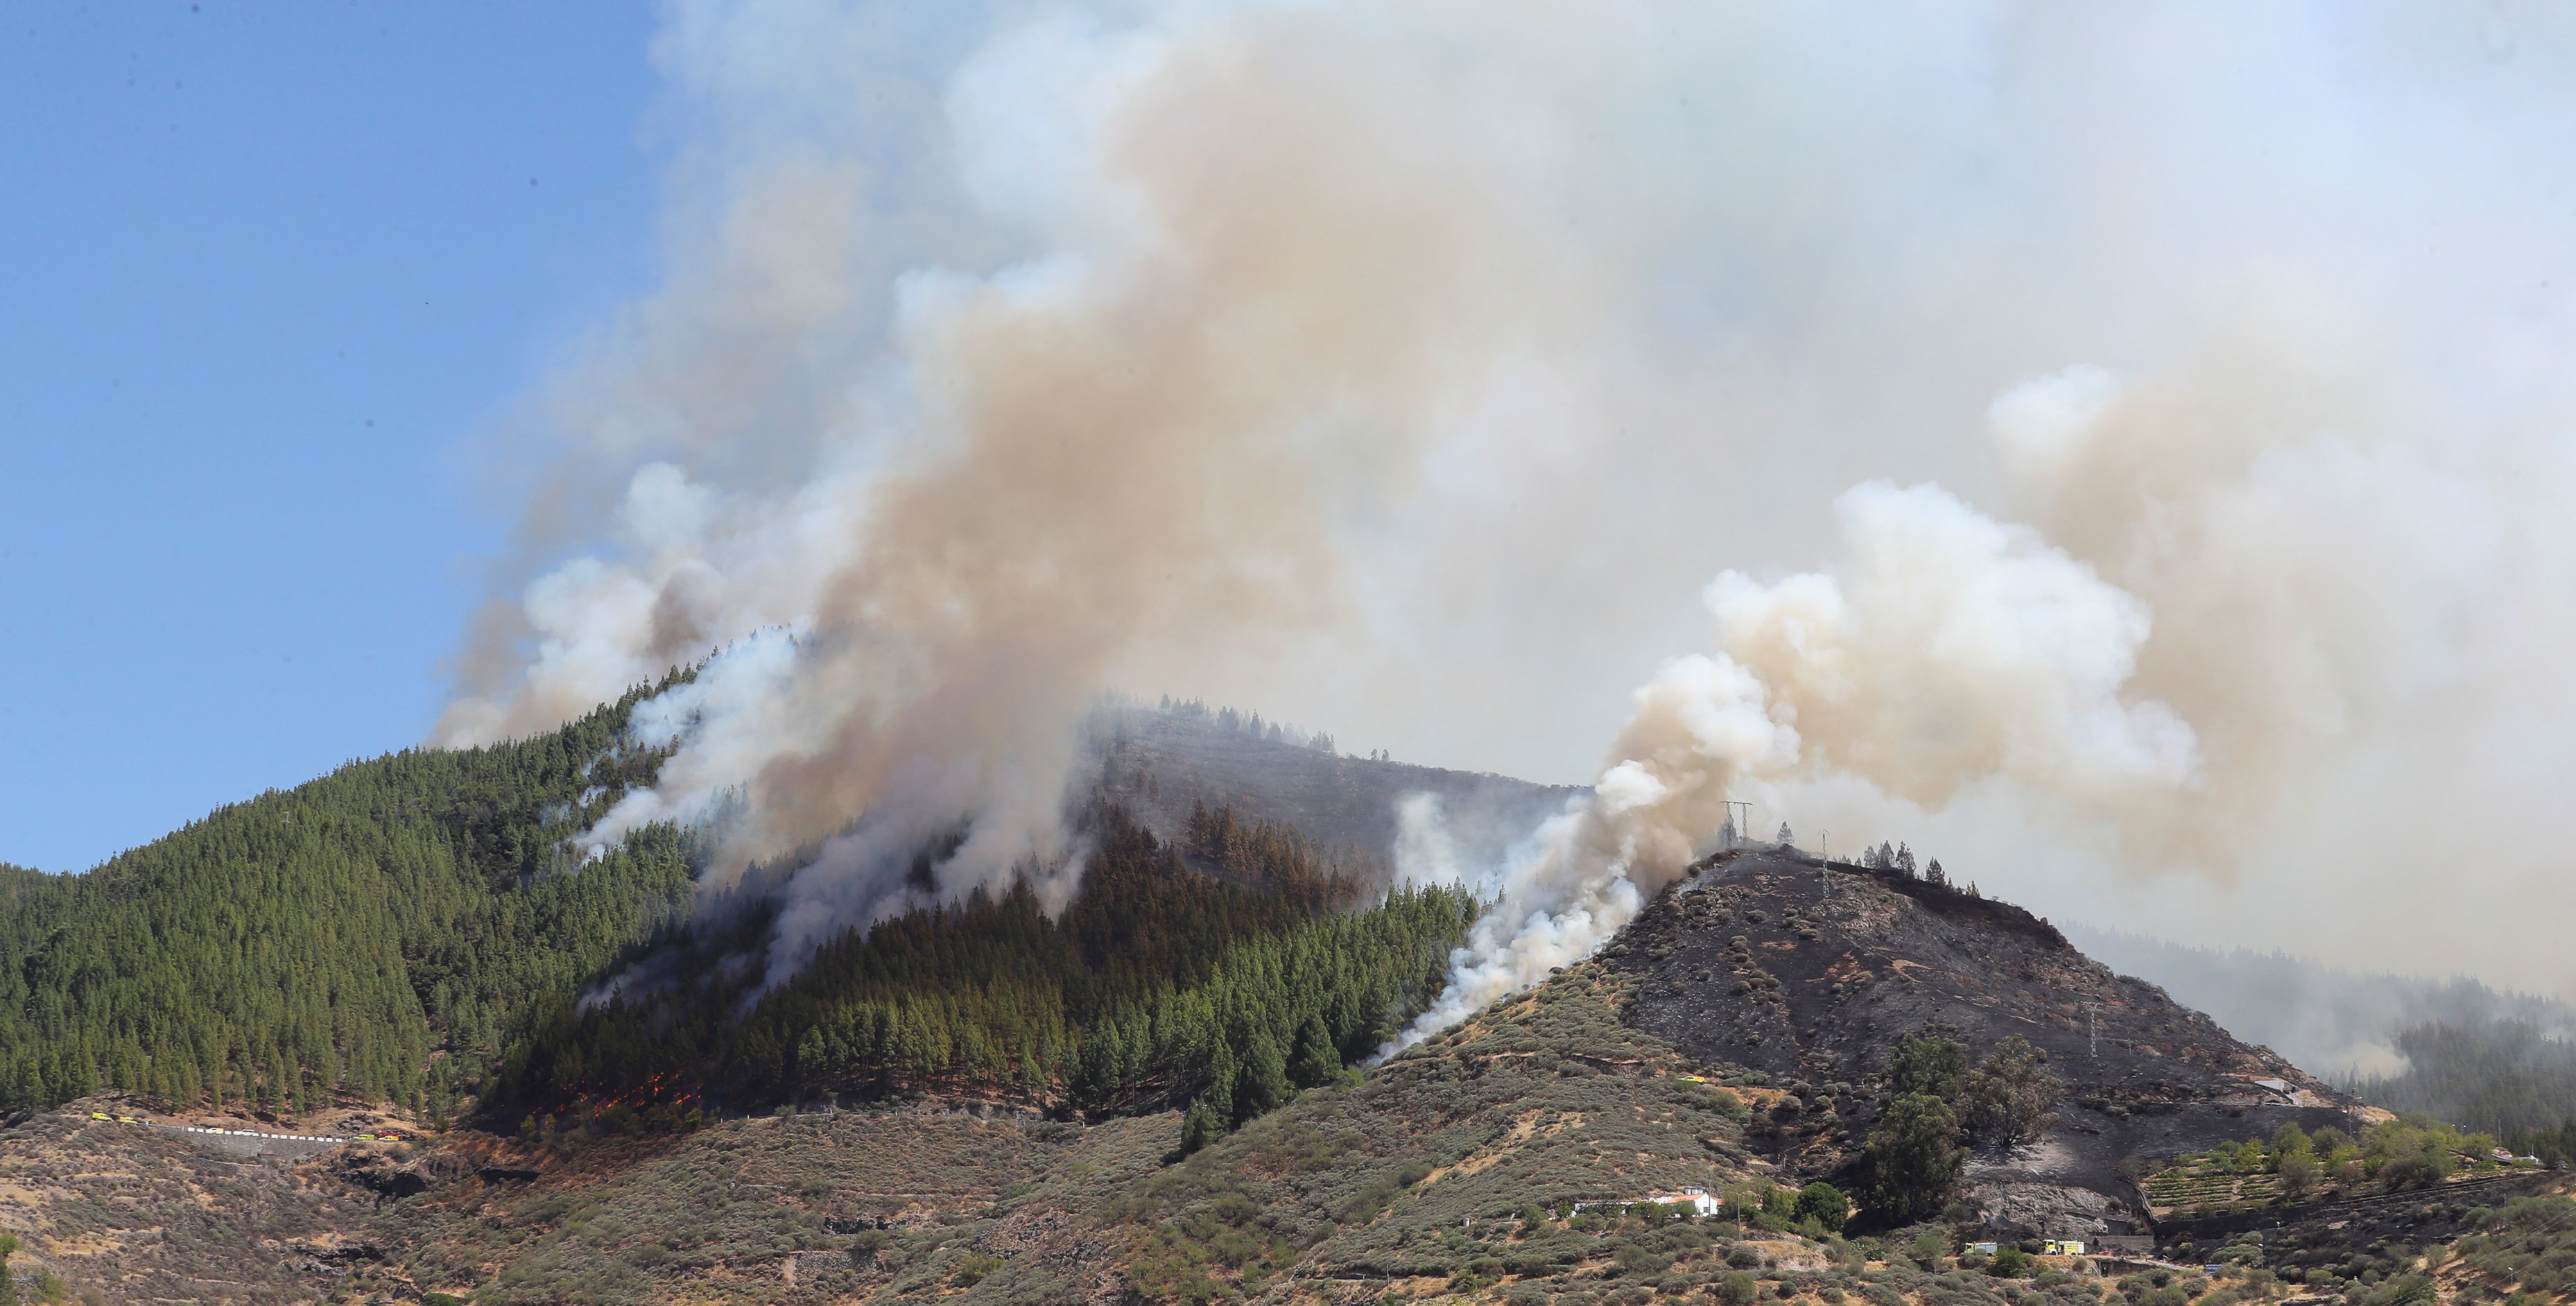 epa07766556 Smoke rises from a forest fire in Artenara, Gran Canaria, Canary Islands, 10 August 2019.  EPA/ELVIRA URQUIJO A.